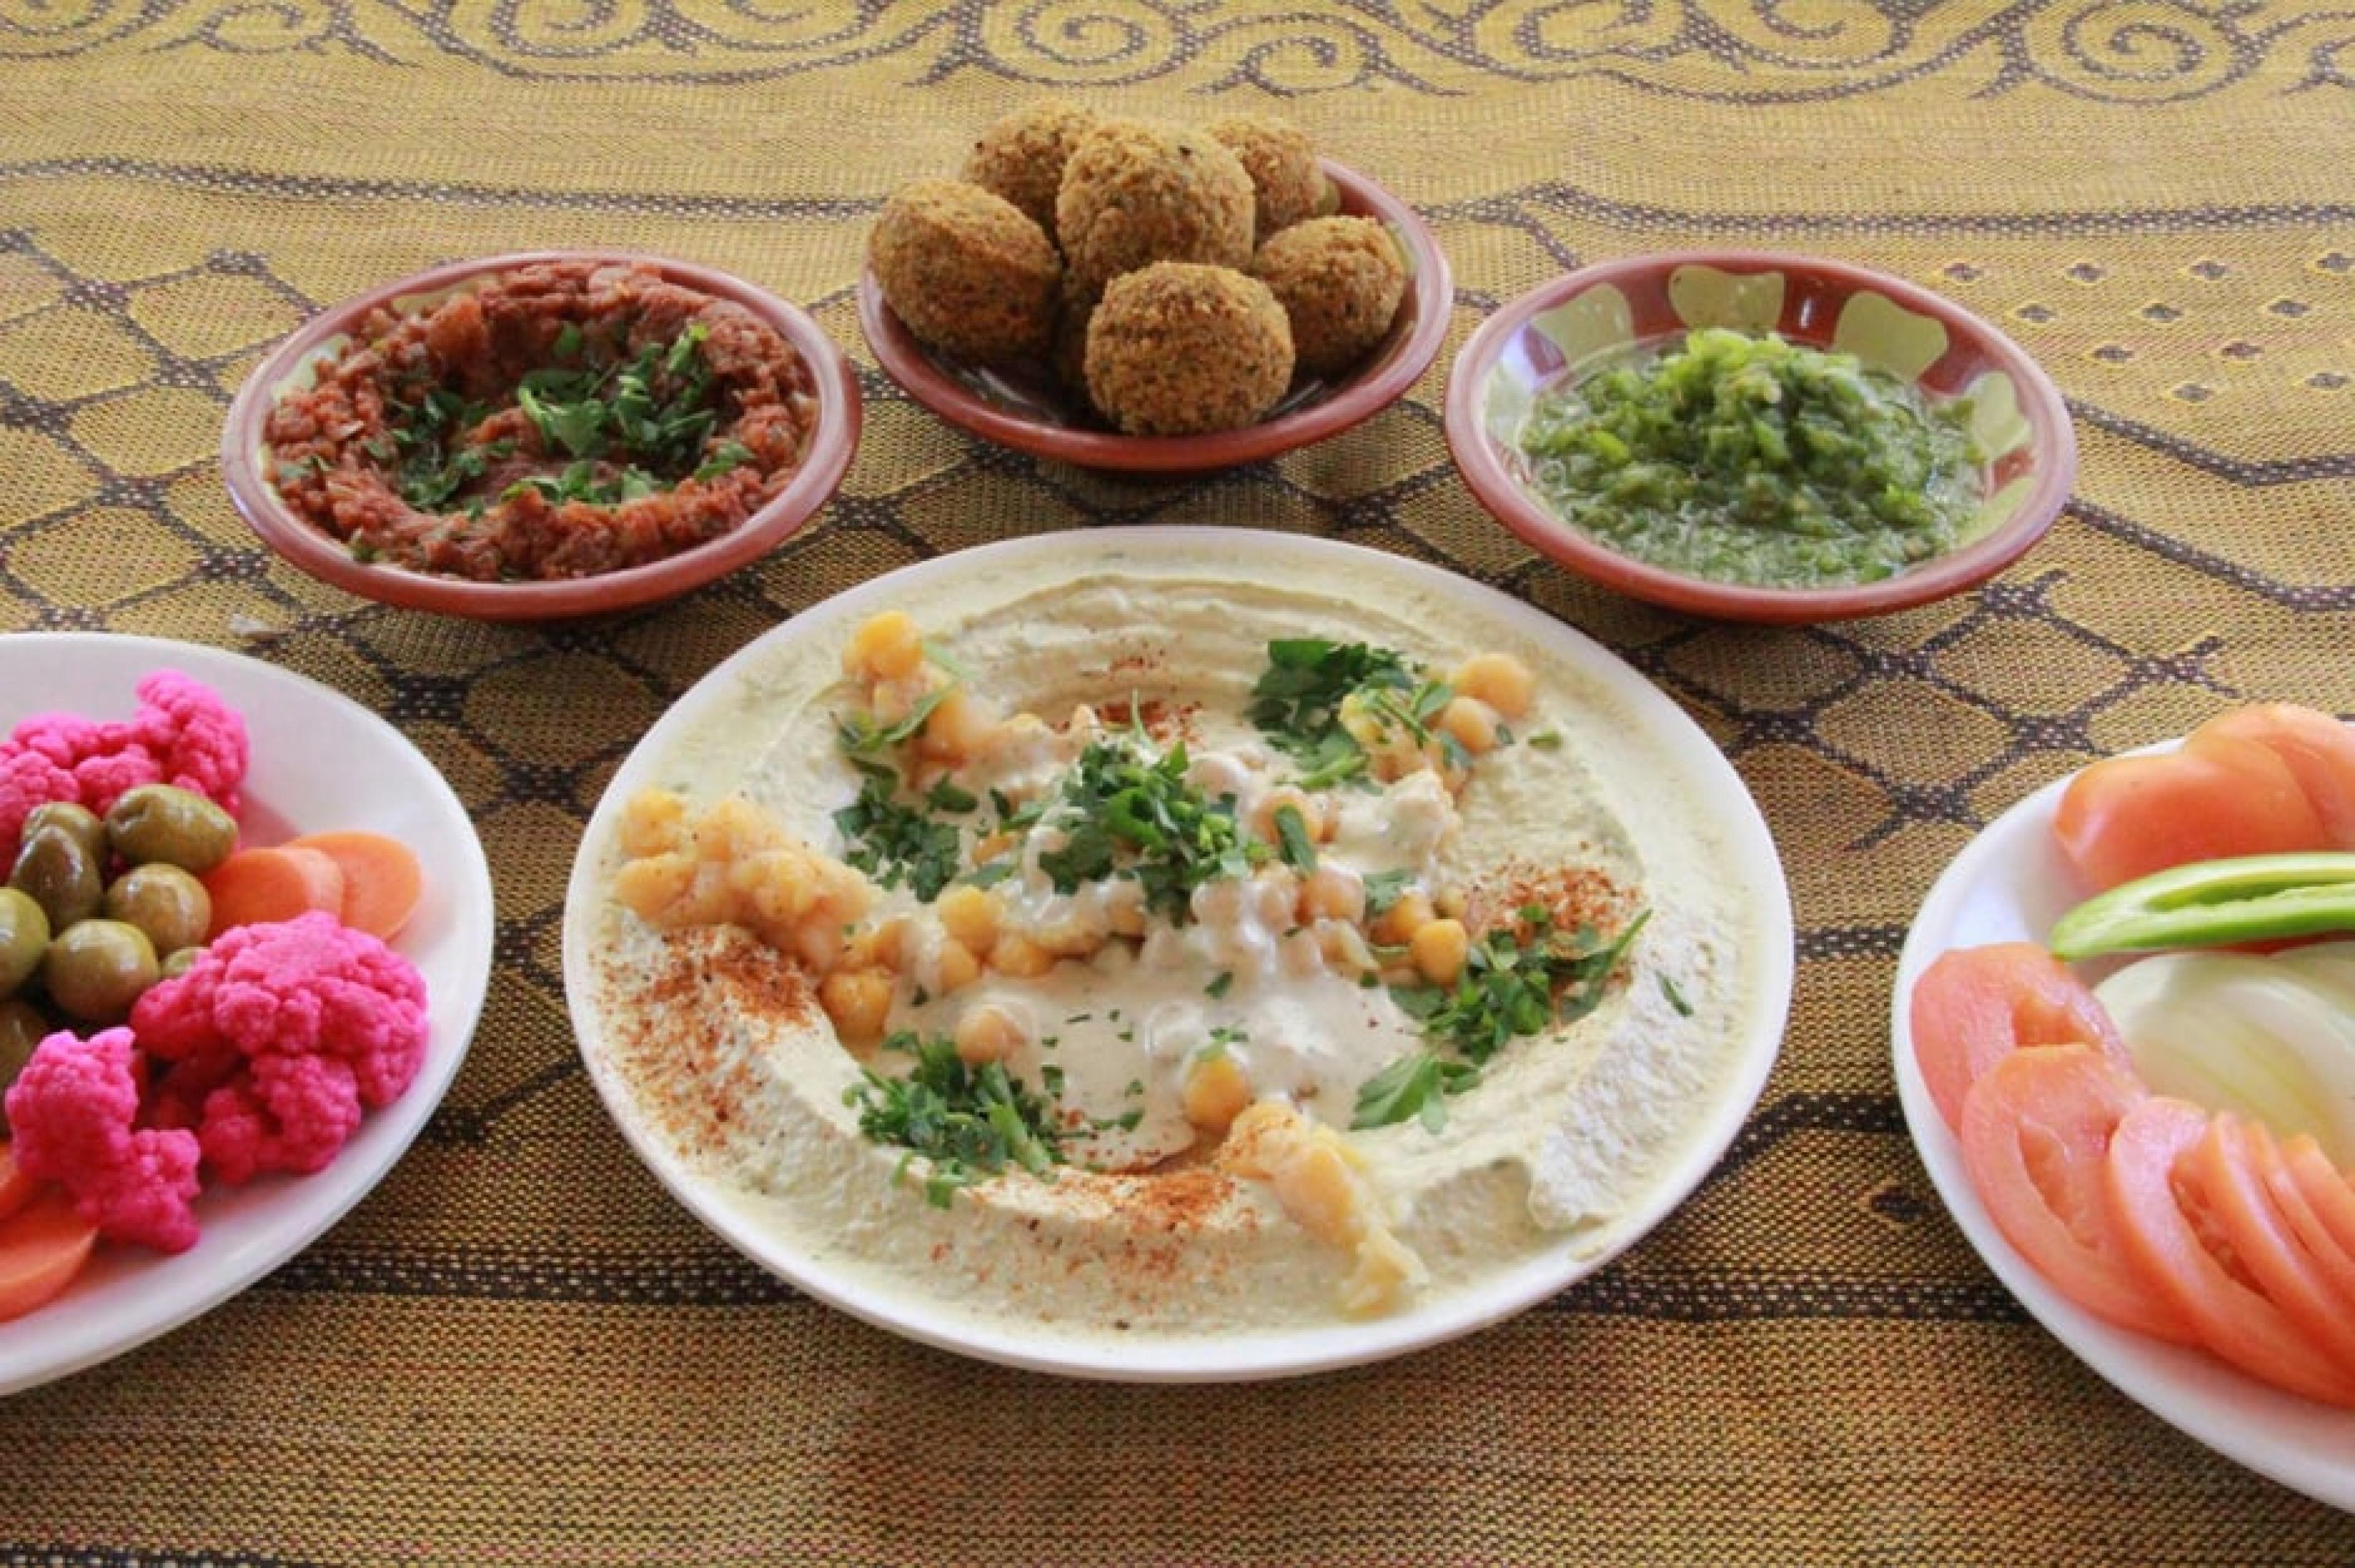 Food at Abu Shukri, Jerusalem, Israel